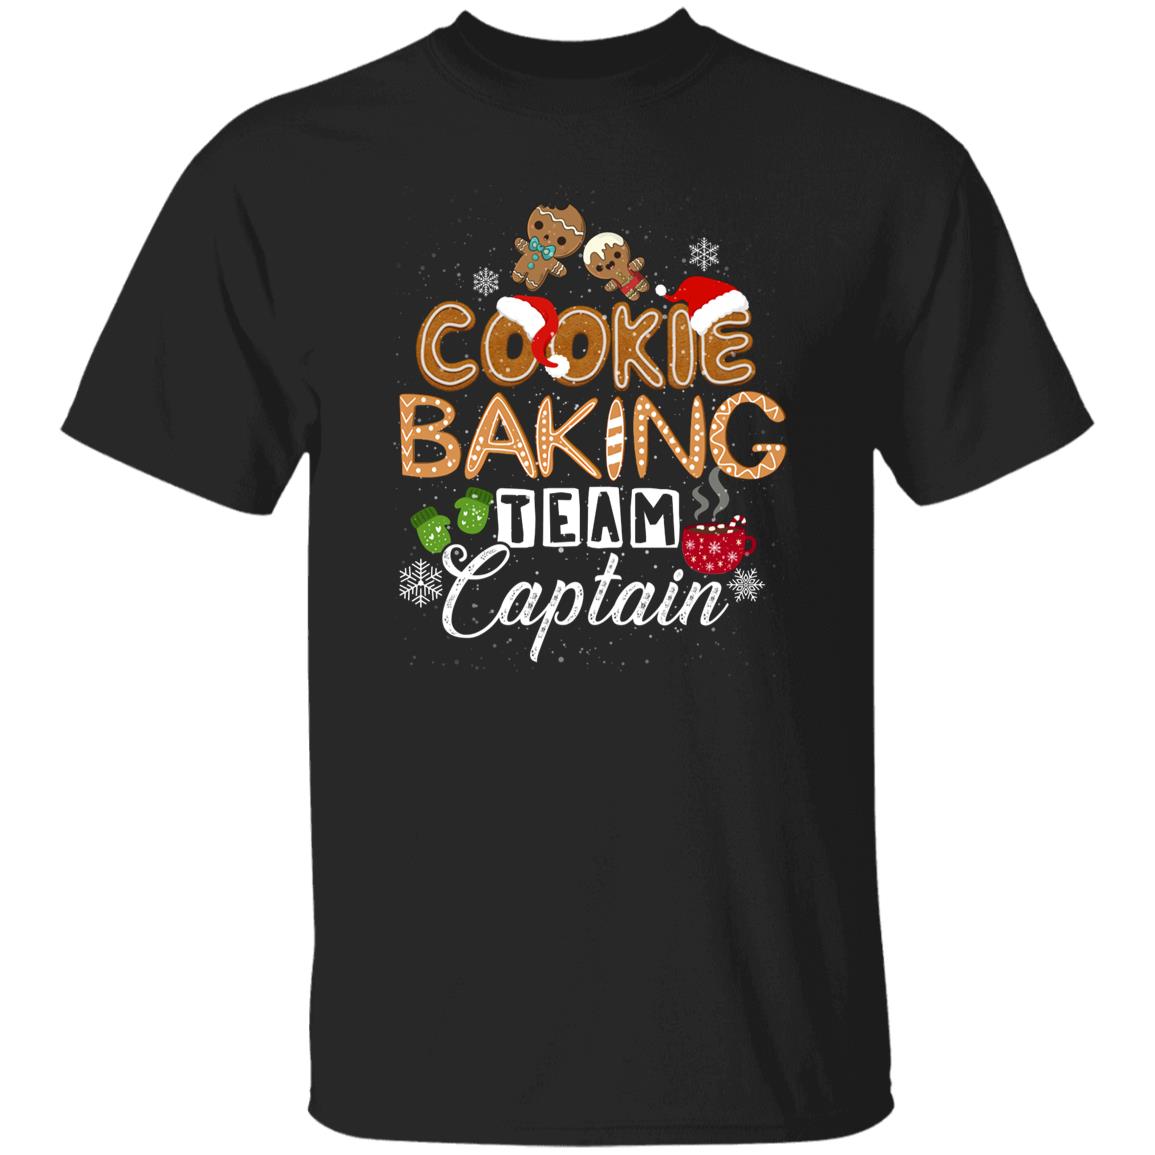 Cookie baking team captain Christmas Unisex Shirt Black Dark Heather-Family-Gift-Planet